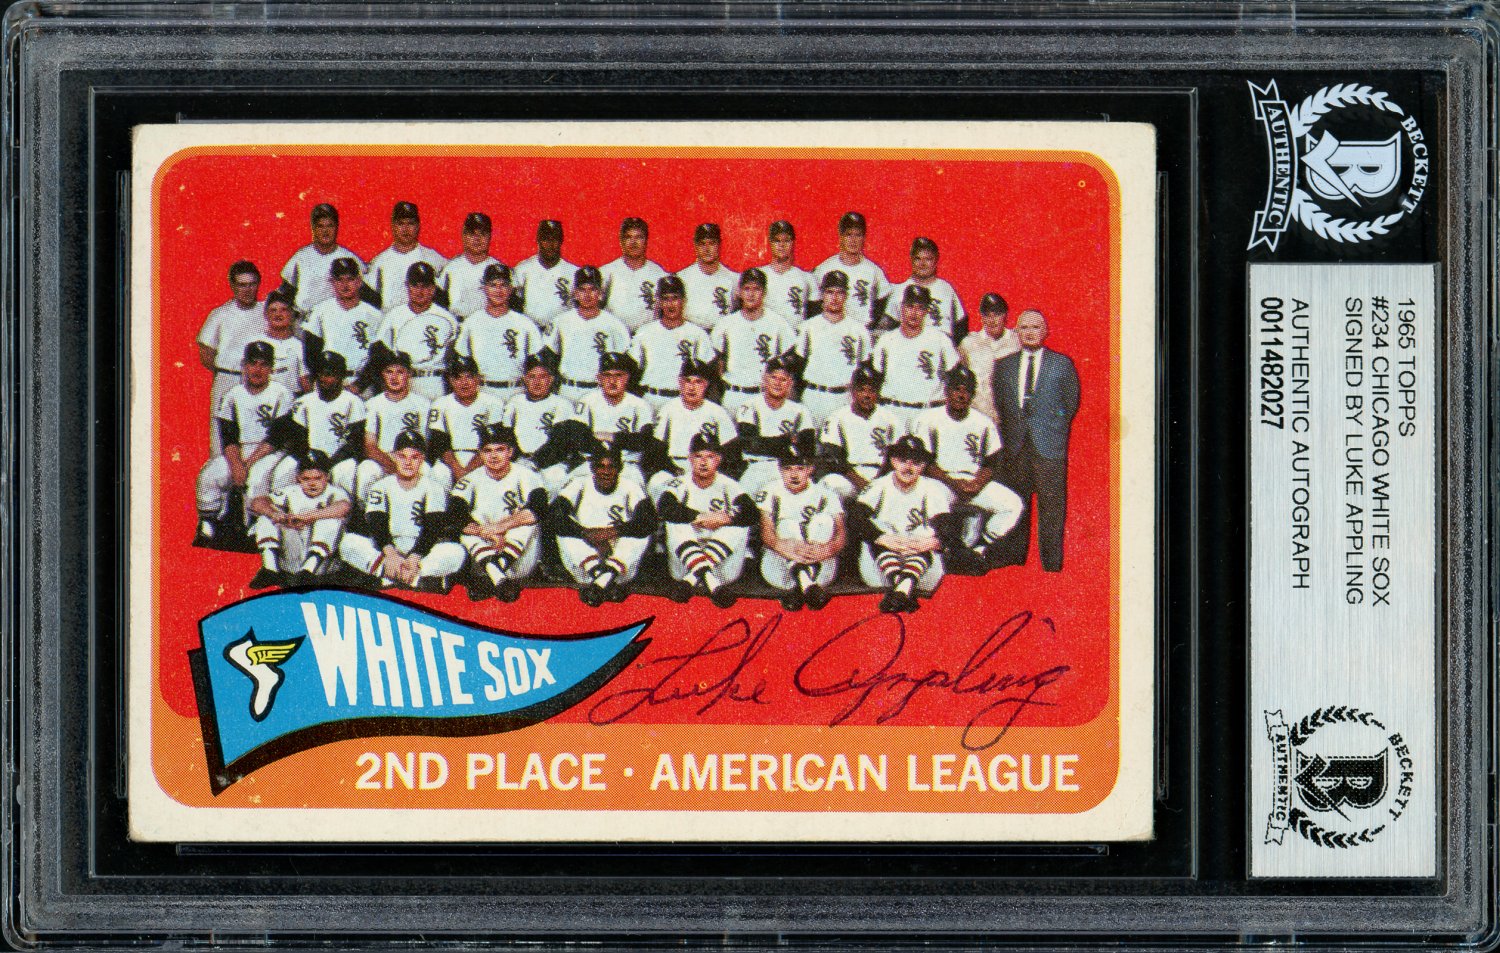 Luke Appling Autographed Signed 1965 Topps Card #234 Chicago White Sox  Beckett Beckett